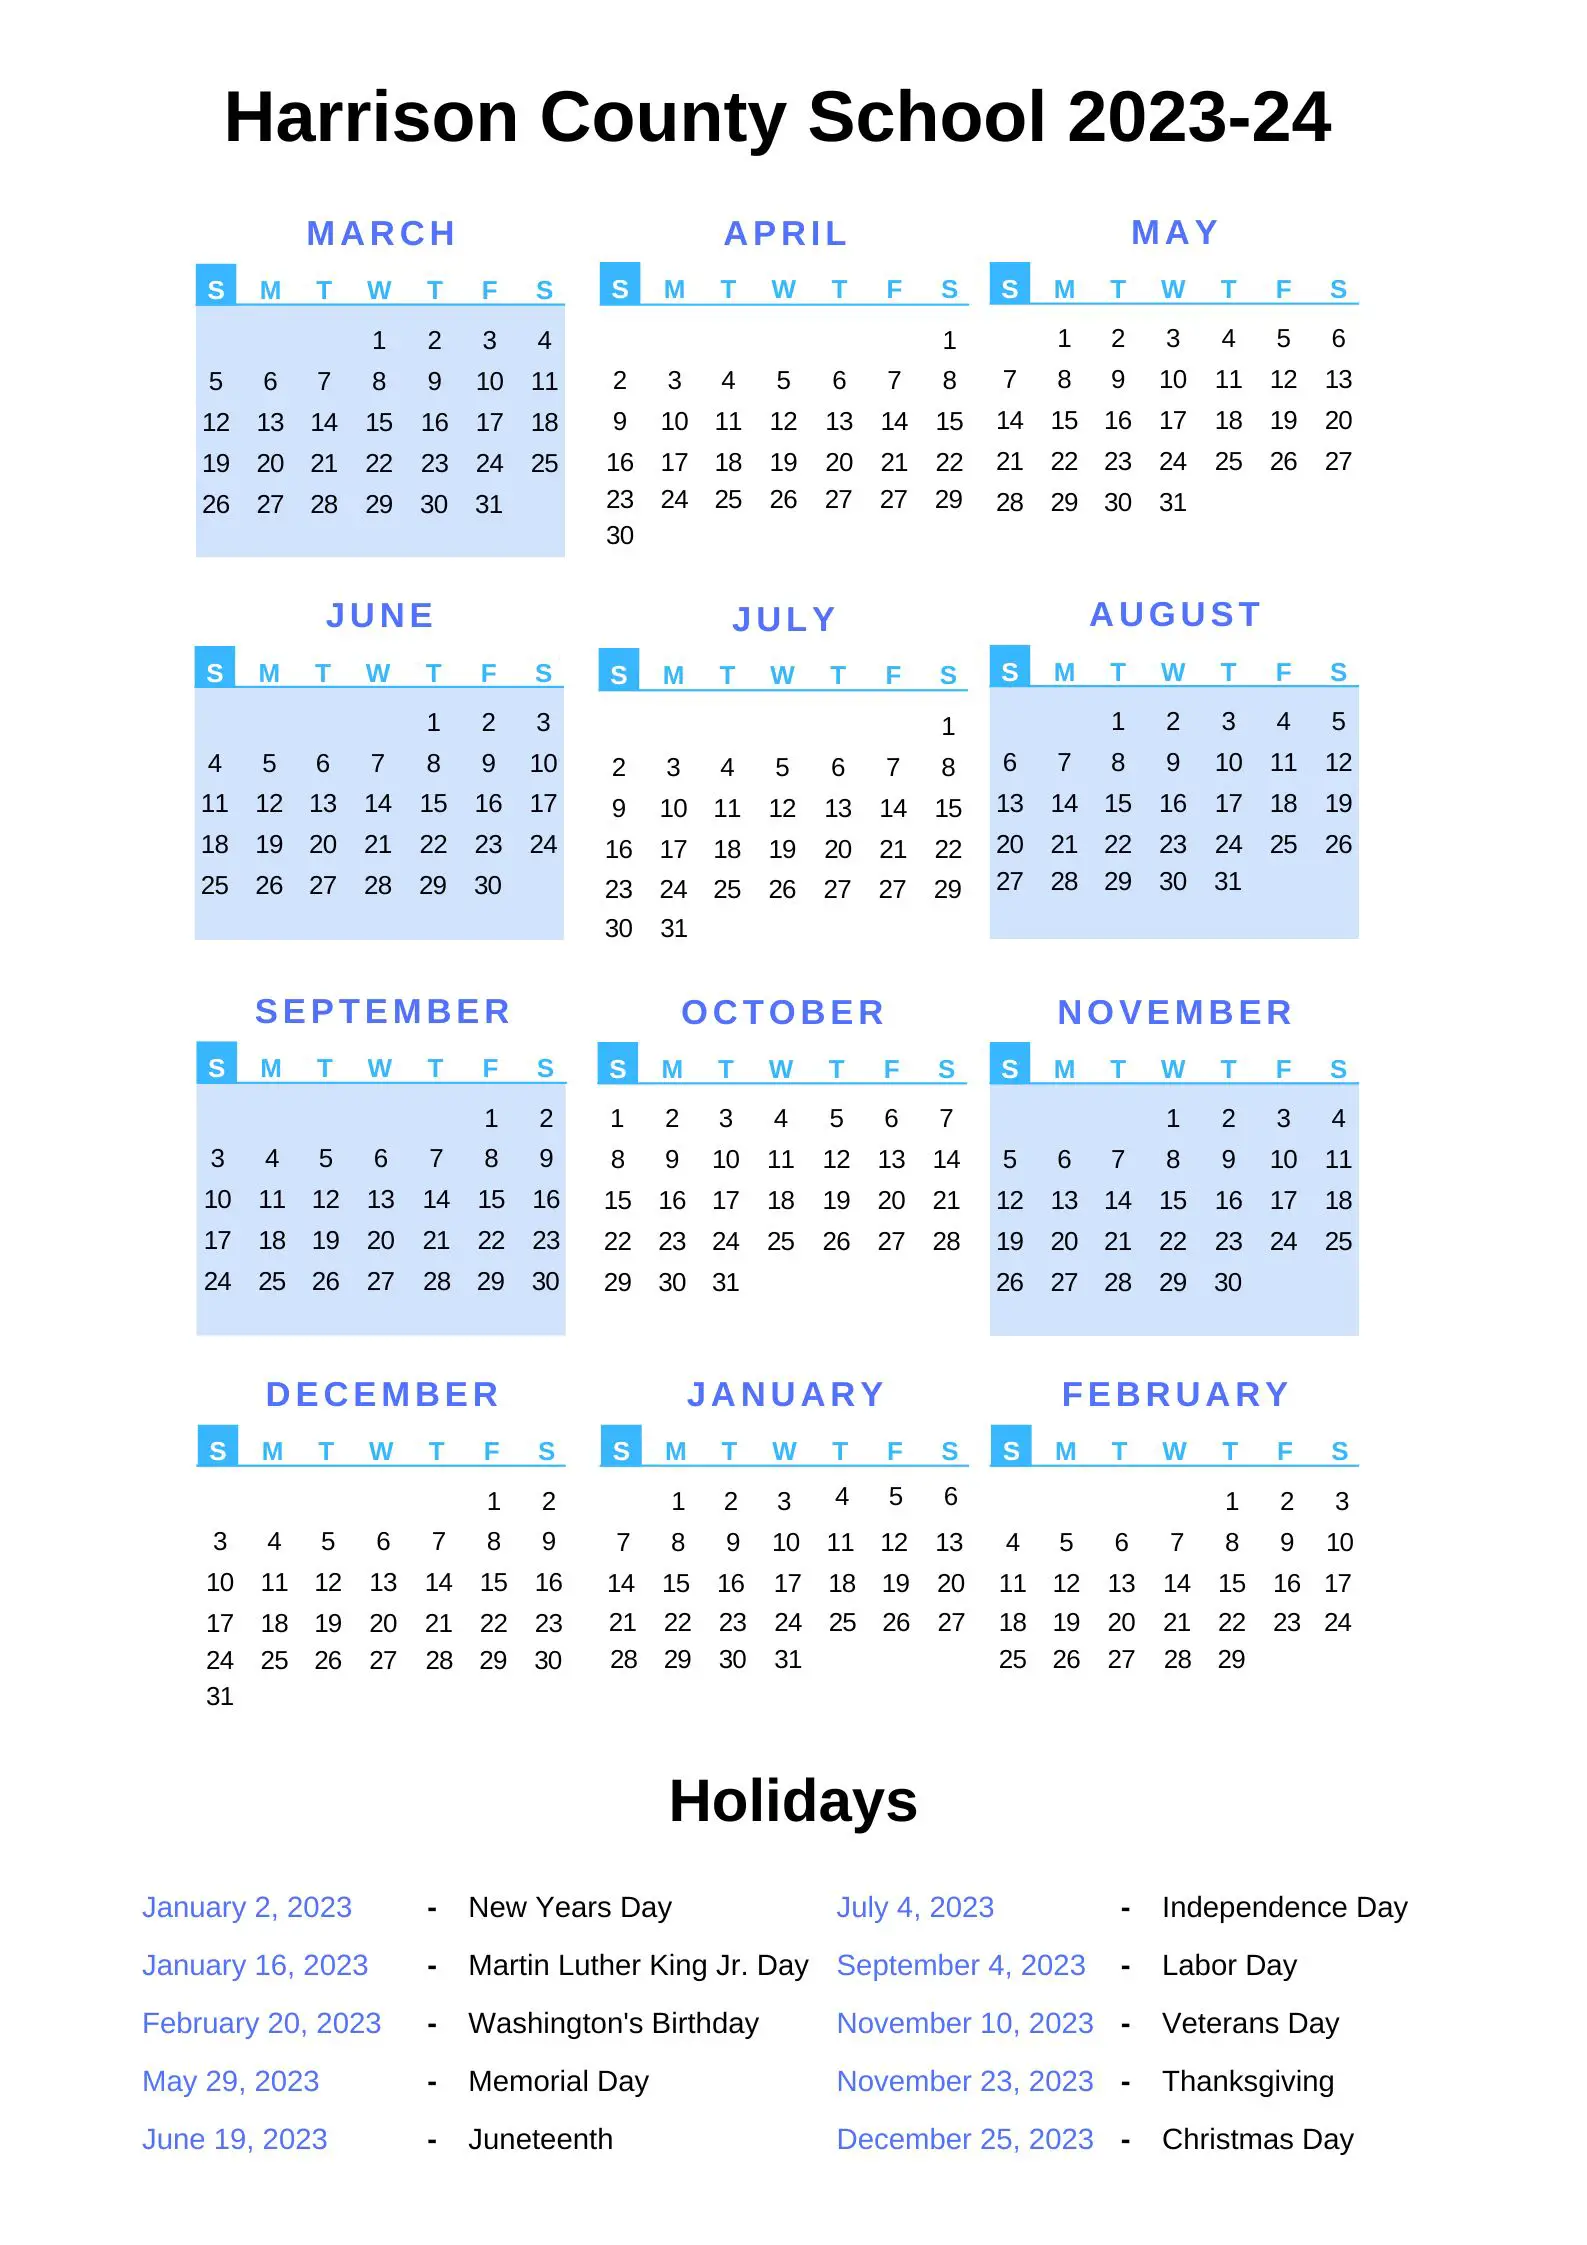 harrison-county-schools-calendar-2023-24-with-holidays